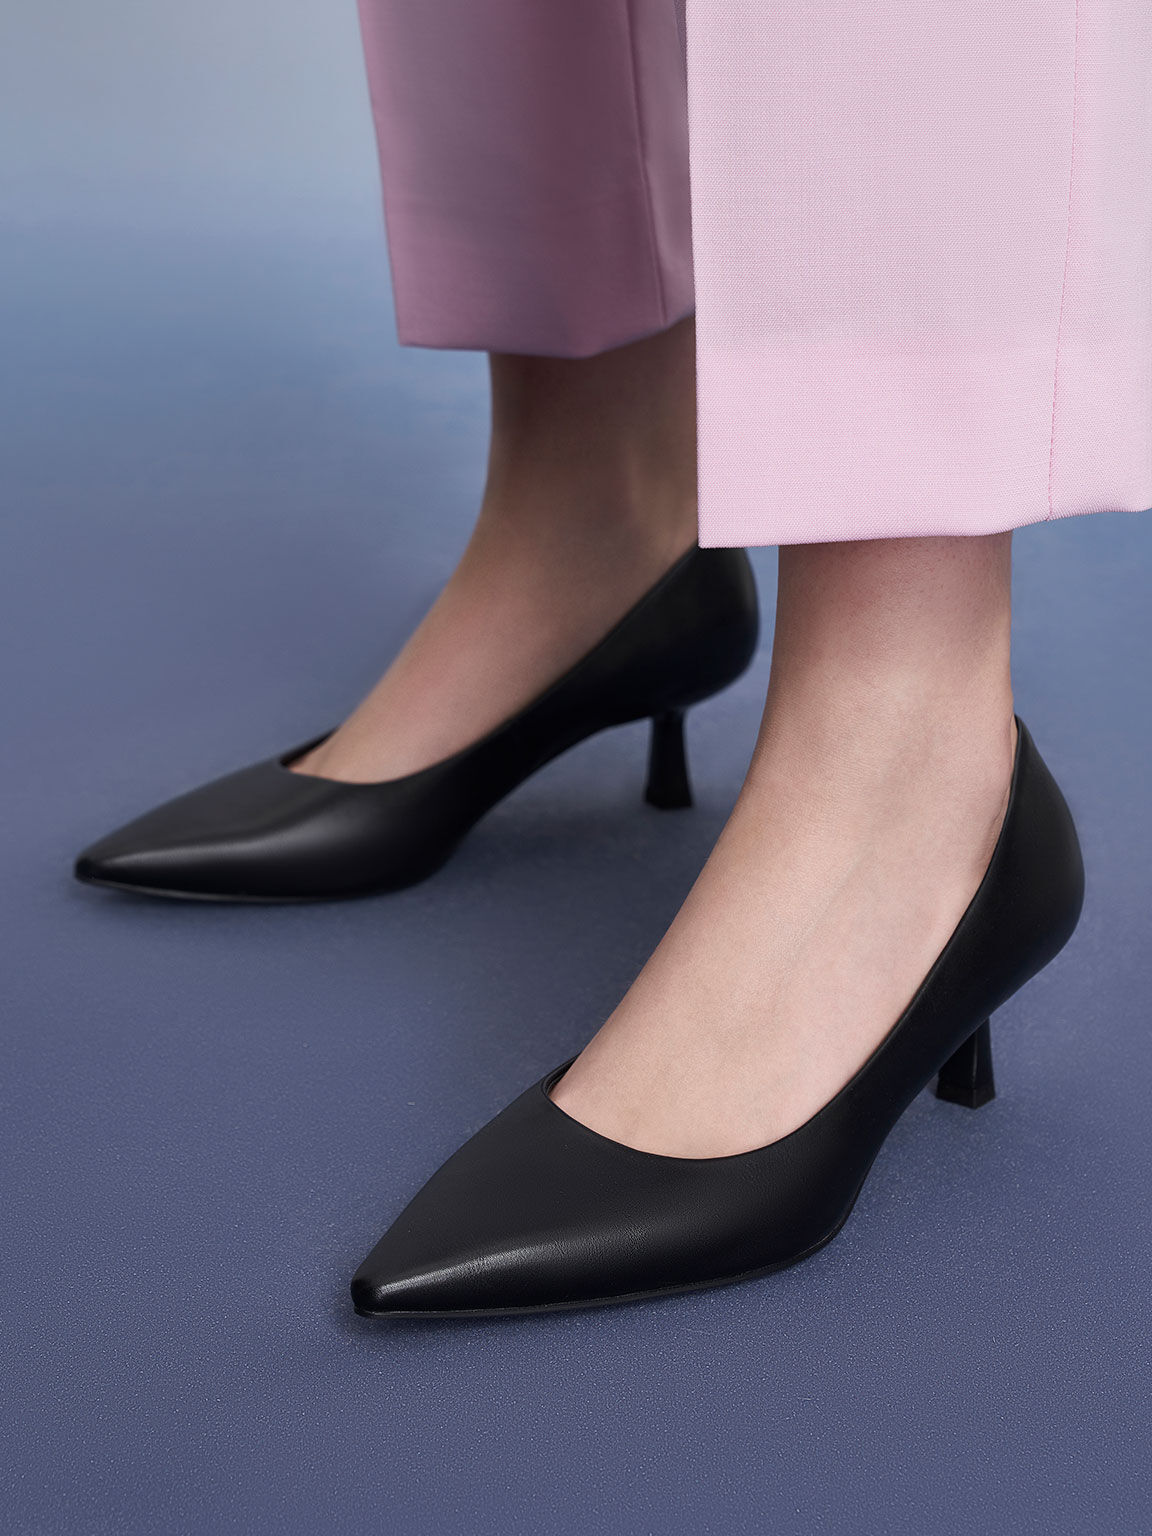 Kitten Heels Women Sandals Pointed Toe Mid Heel Slingback Shoes Summer Pumps  Sz | eBay